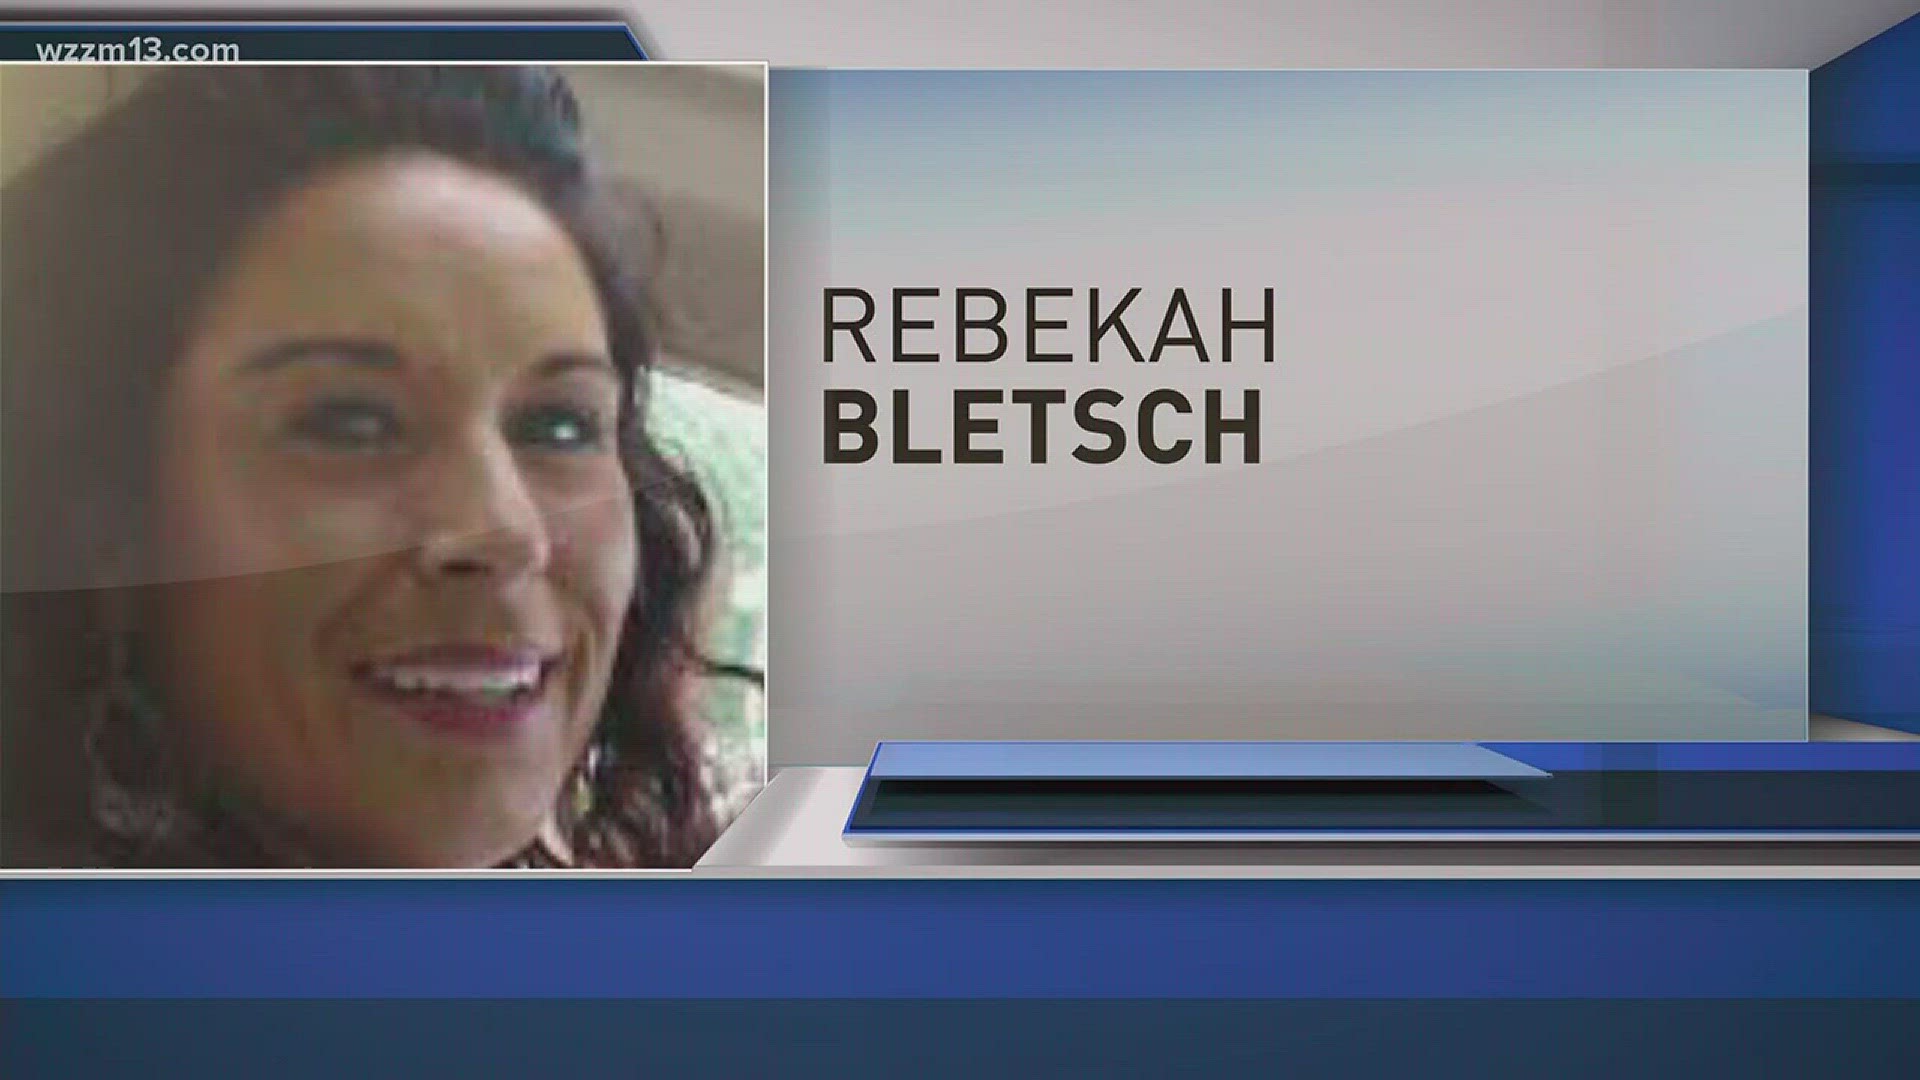 The trial for the murder to Rebekah Bletsch begins next week.